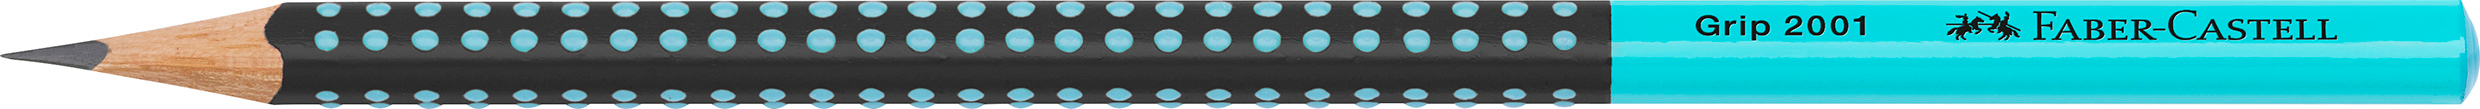 FABER-CASTELL Crayon Grip 2001 517012 Two Tone noir/turquoise Two Tone noir/turquoise